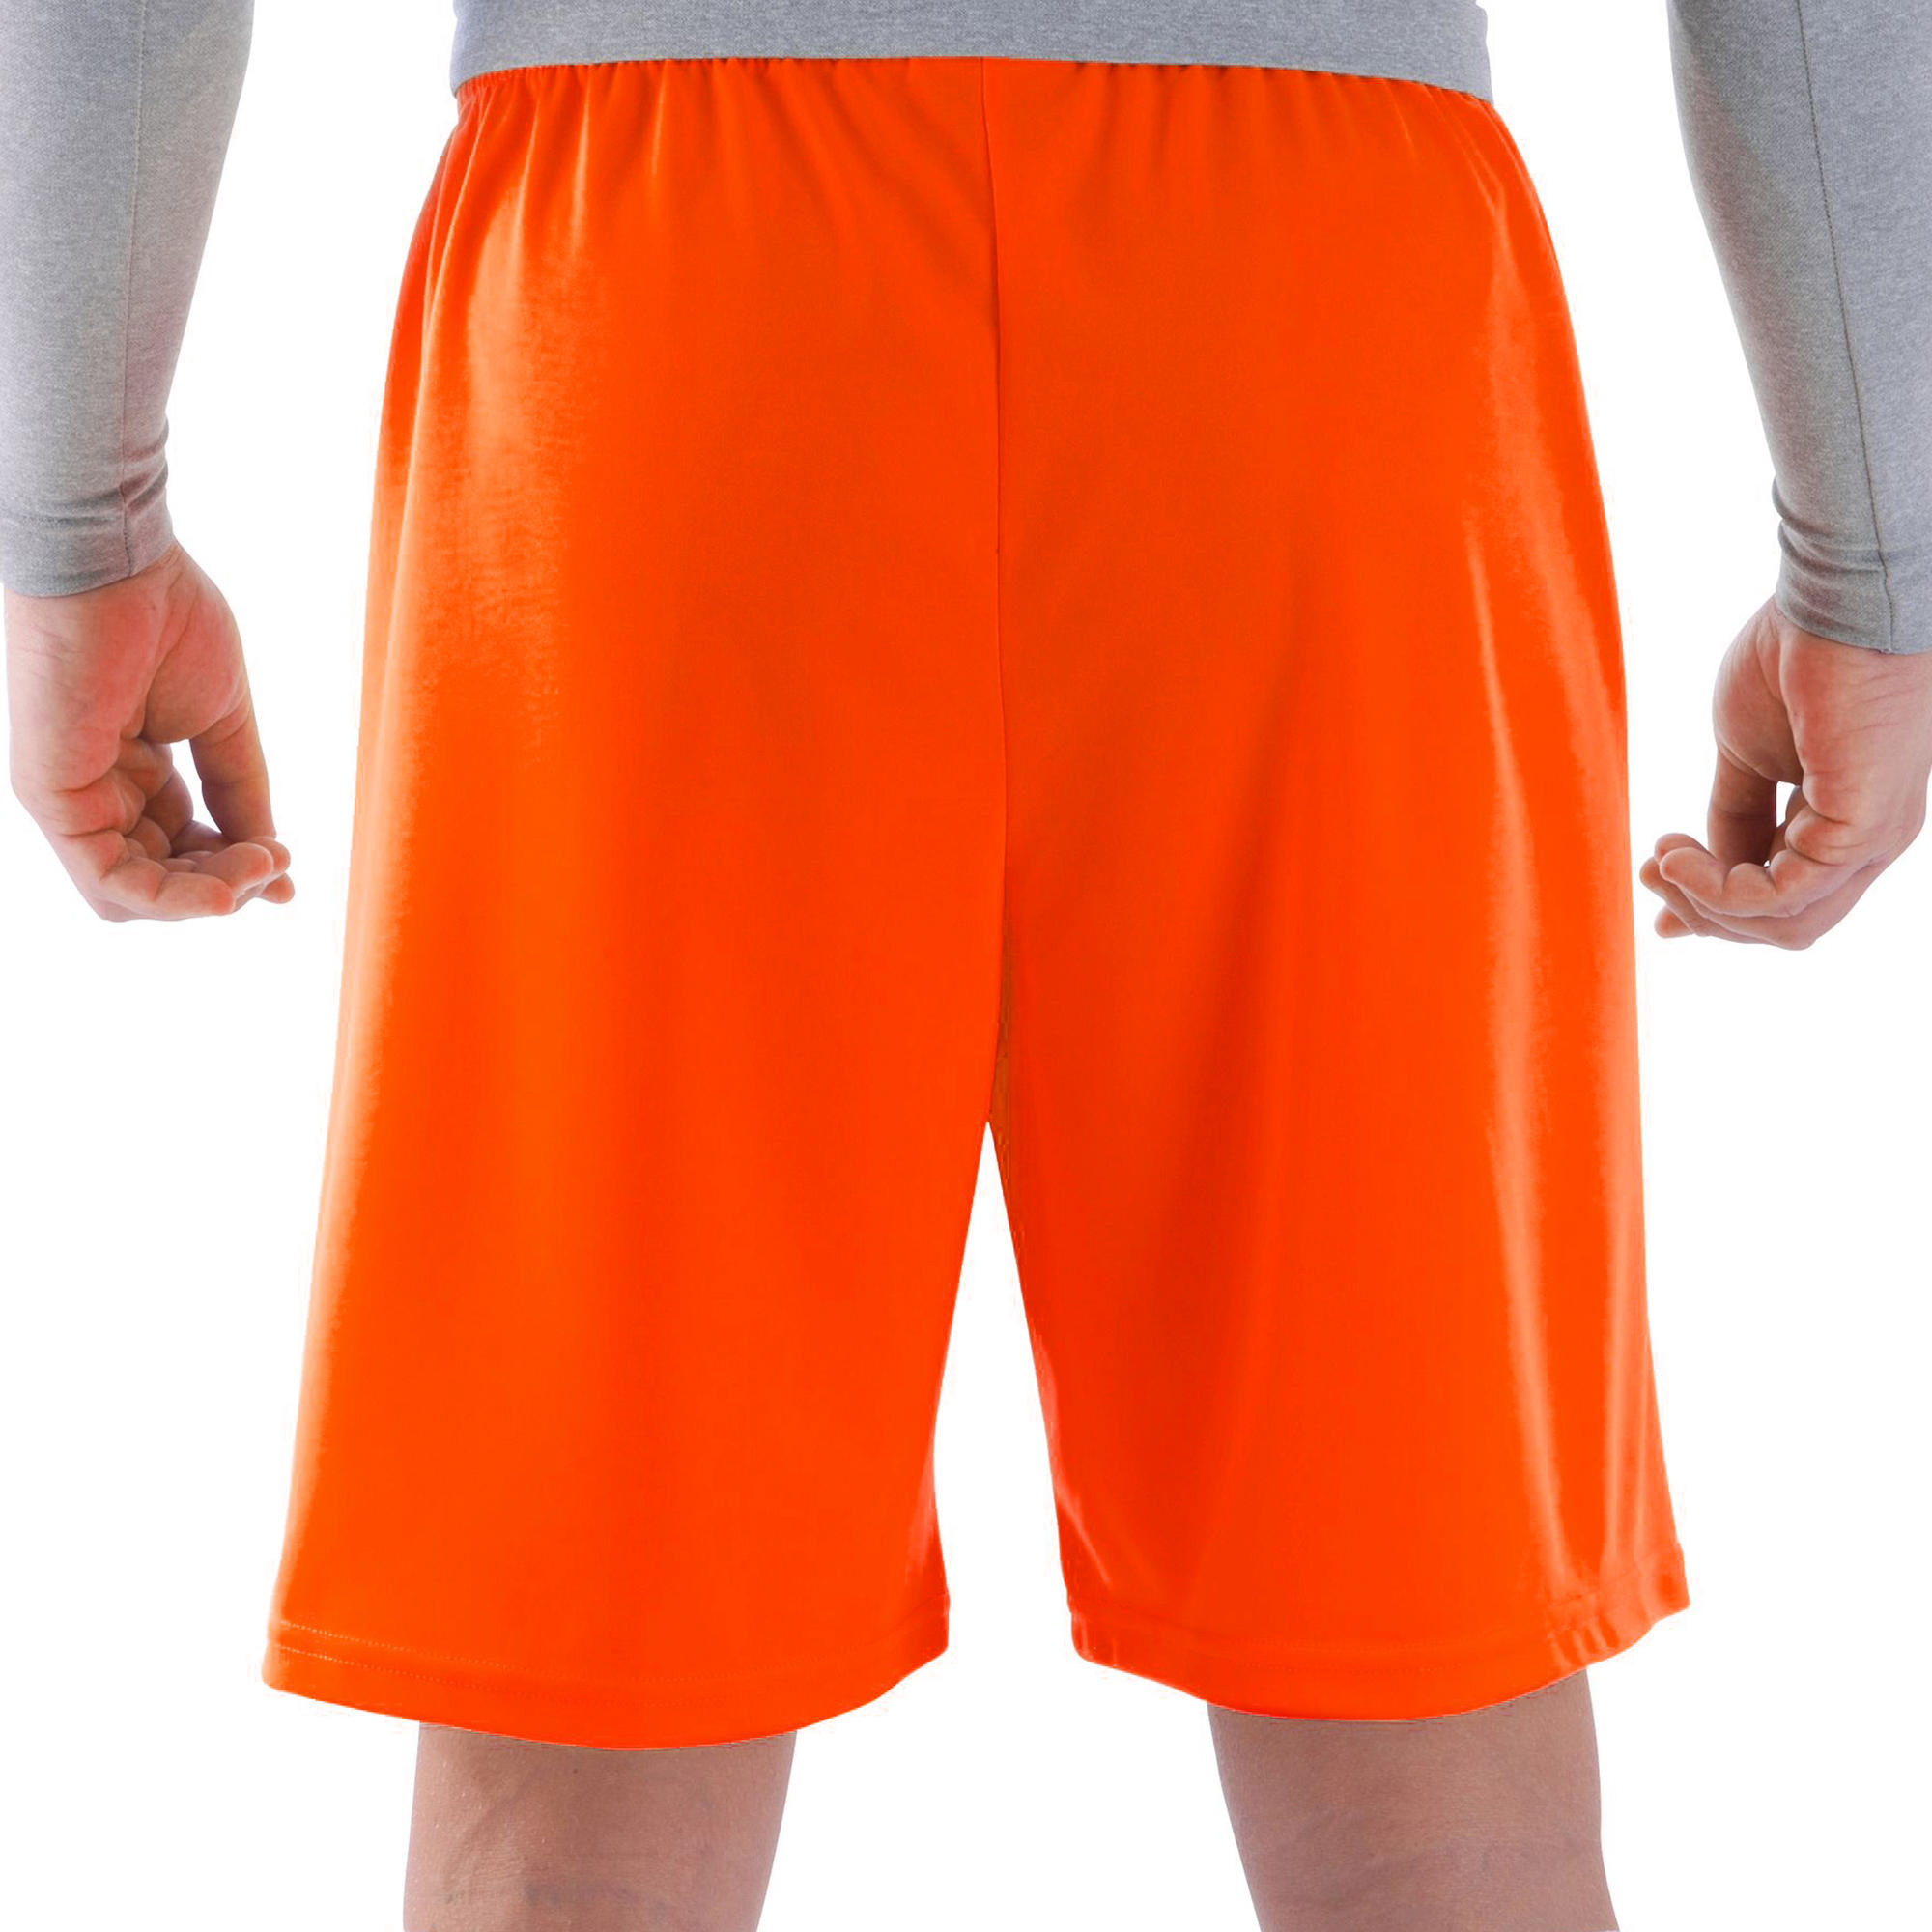 F100 Adult Football Shorts - Orange 4/8